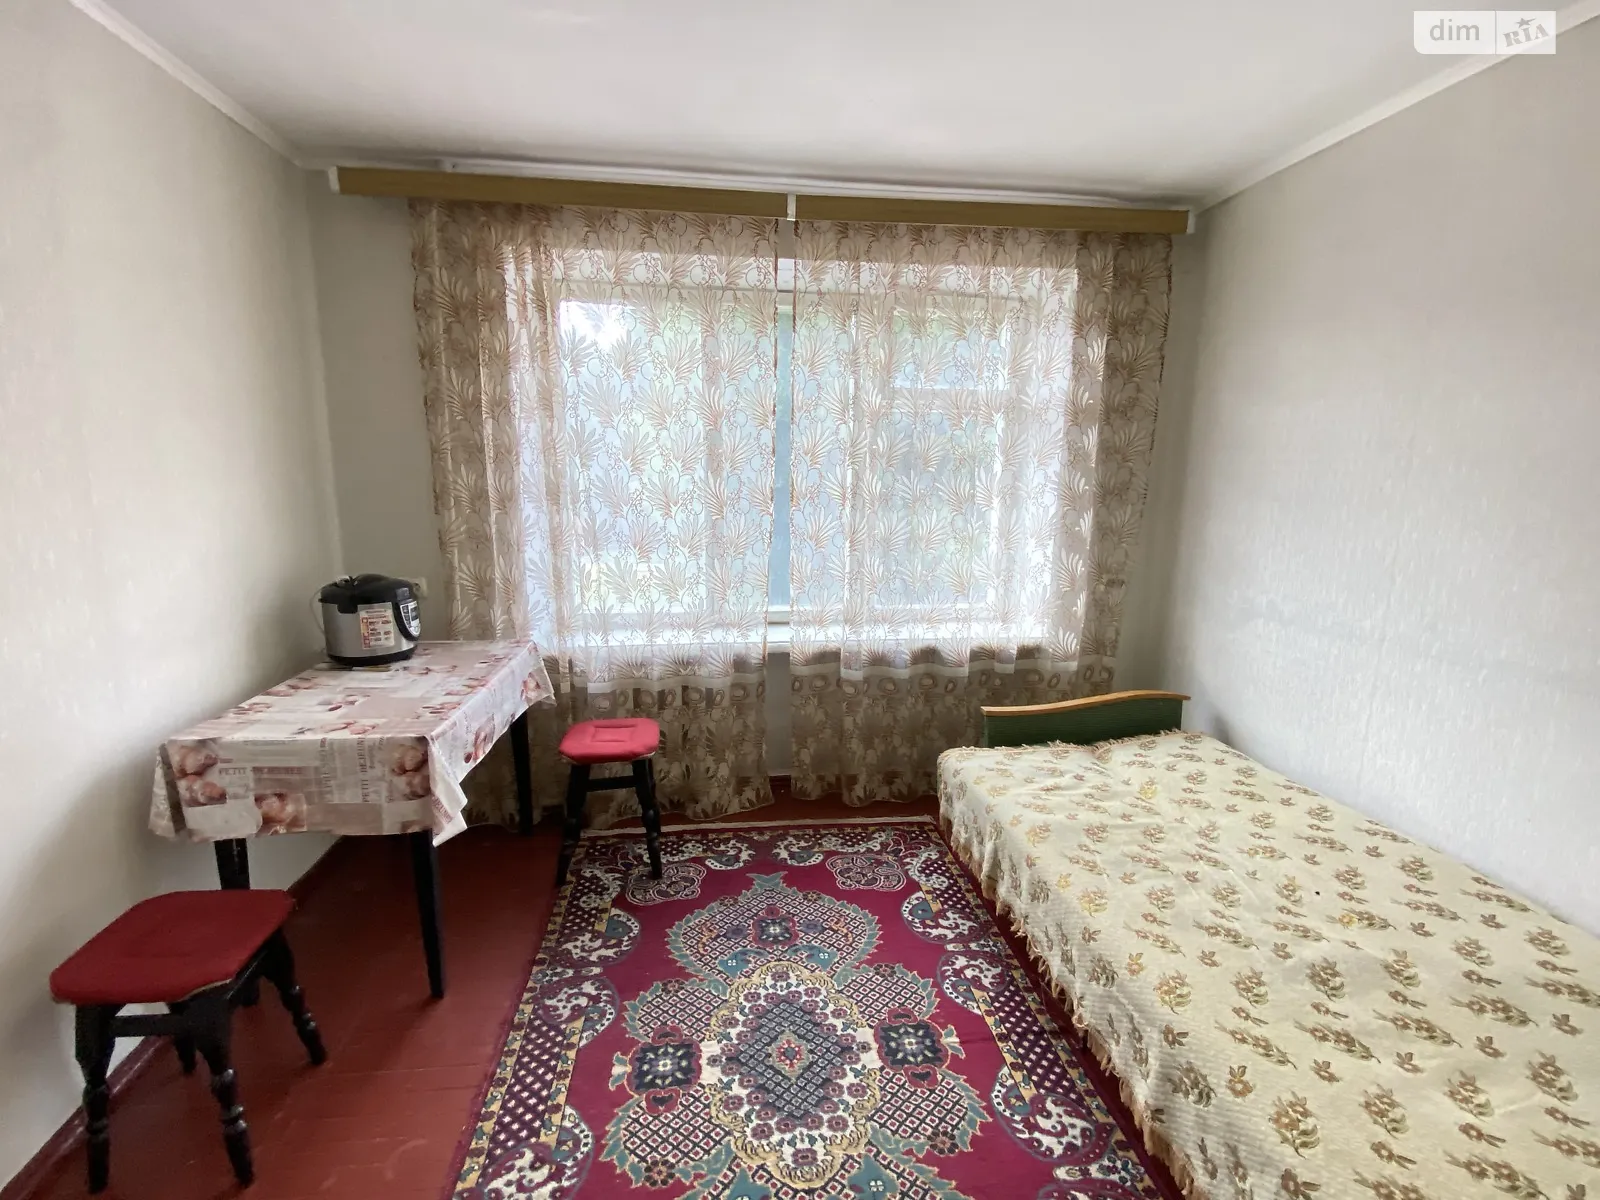 Продается комната 15.5 кв. м в Виннице, цена: 13000 $ - фото 1